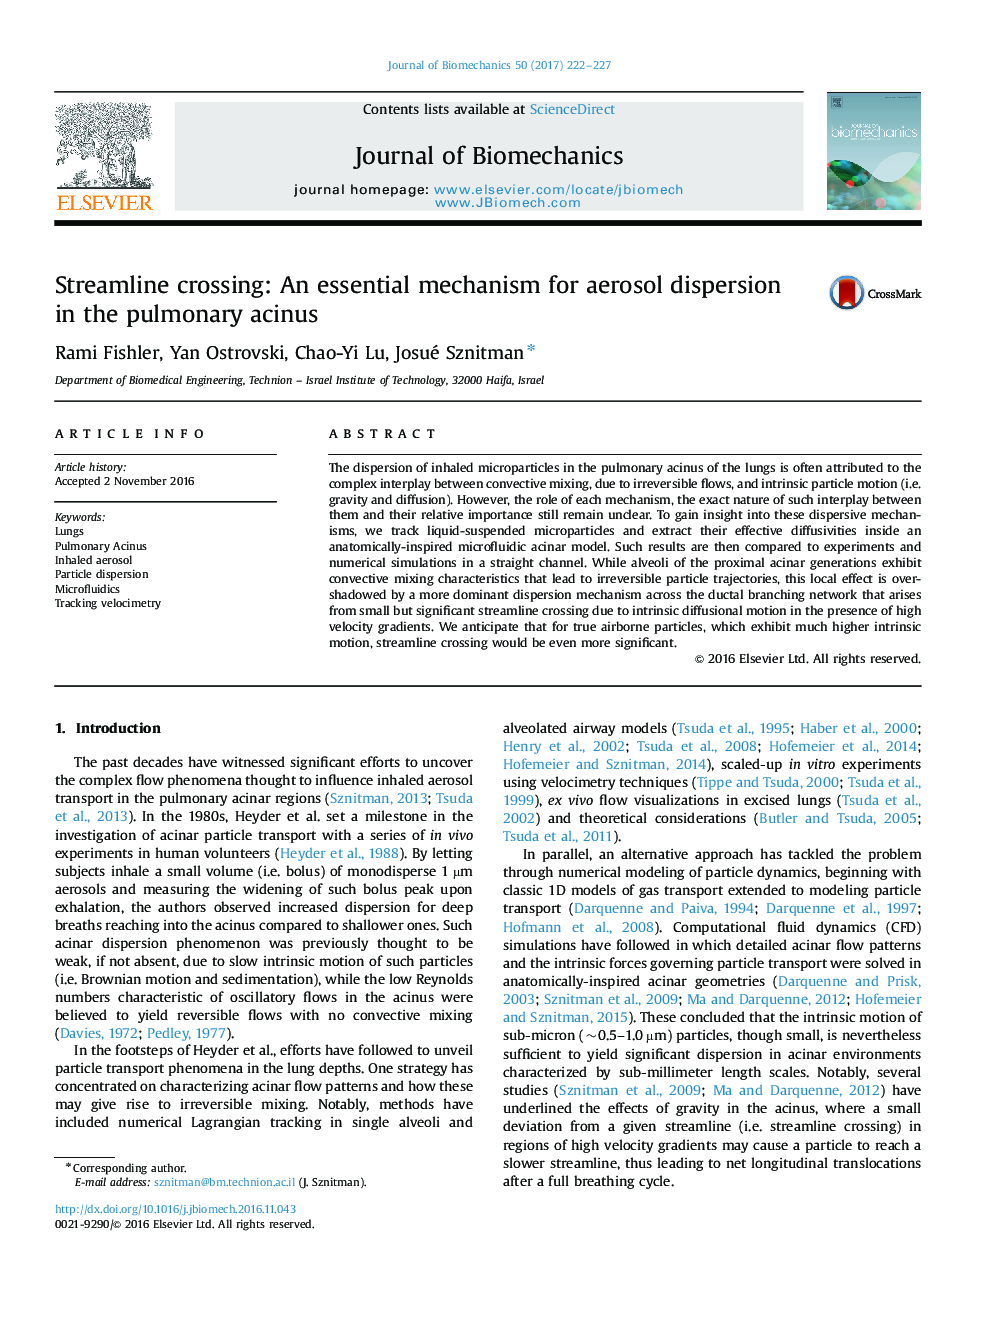 Streamline crossing: An essential mechanism for aerosol dispersion in the pulmonary acinus